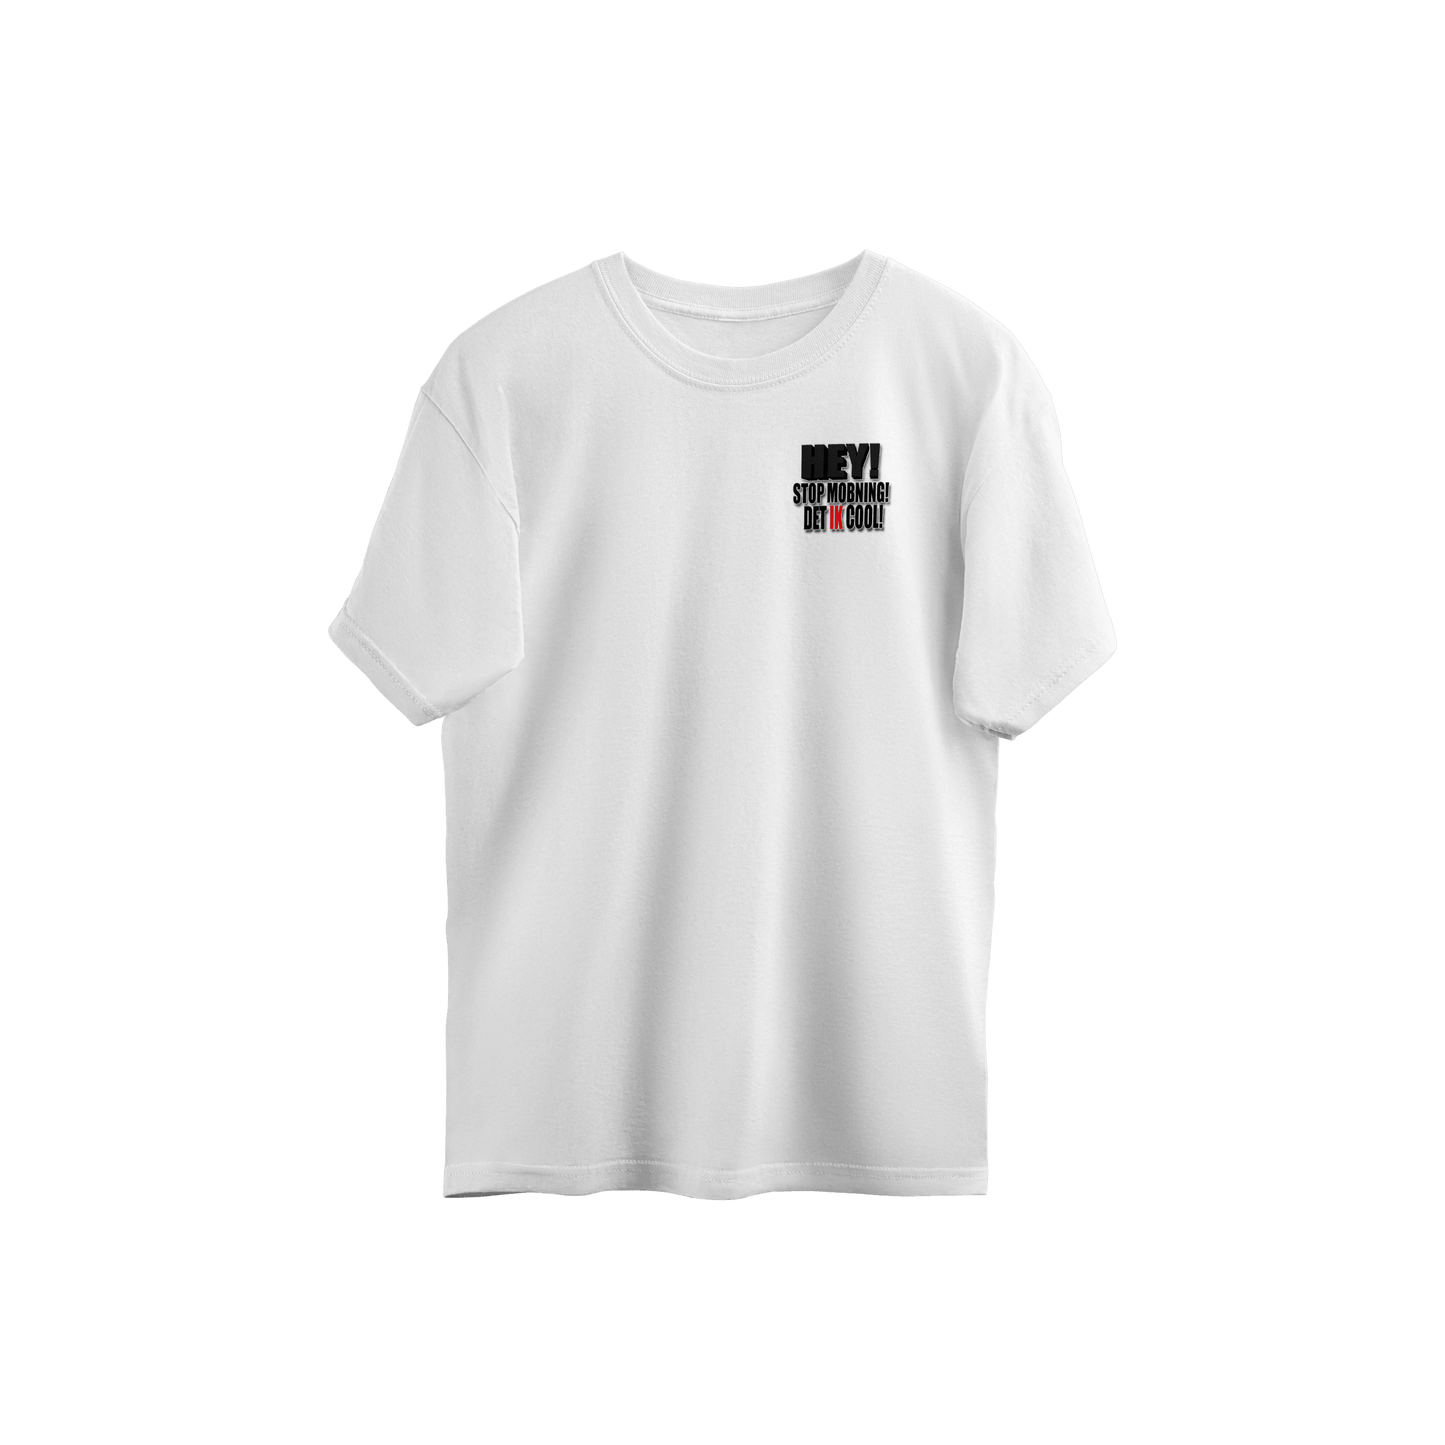 Erdiklowman T-Shirt: StopMobning på brystet